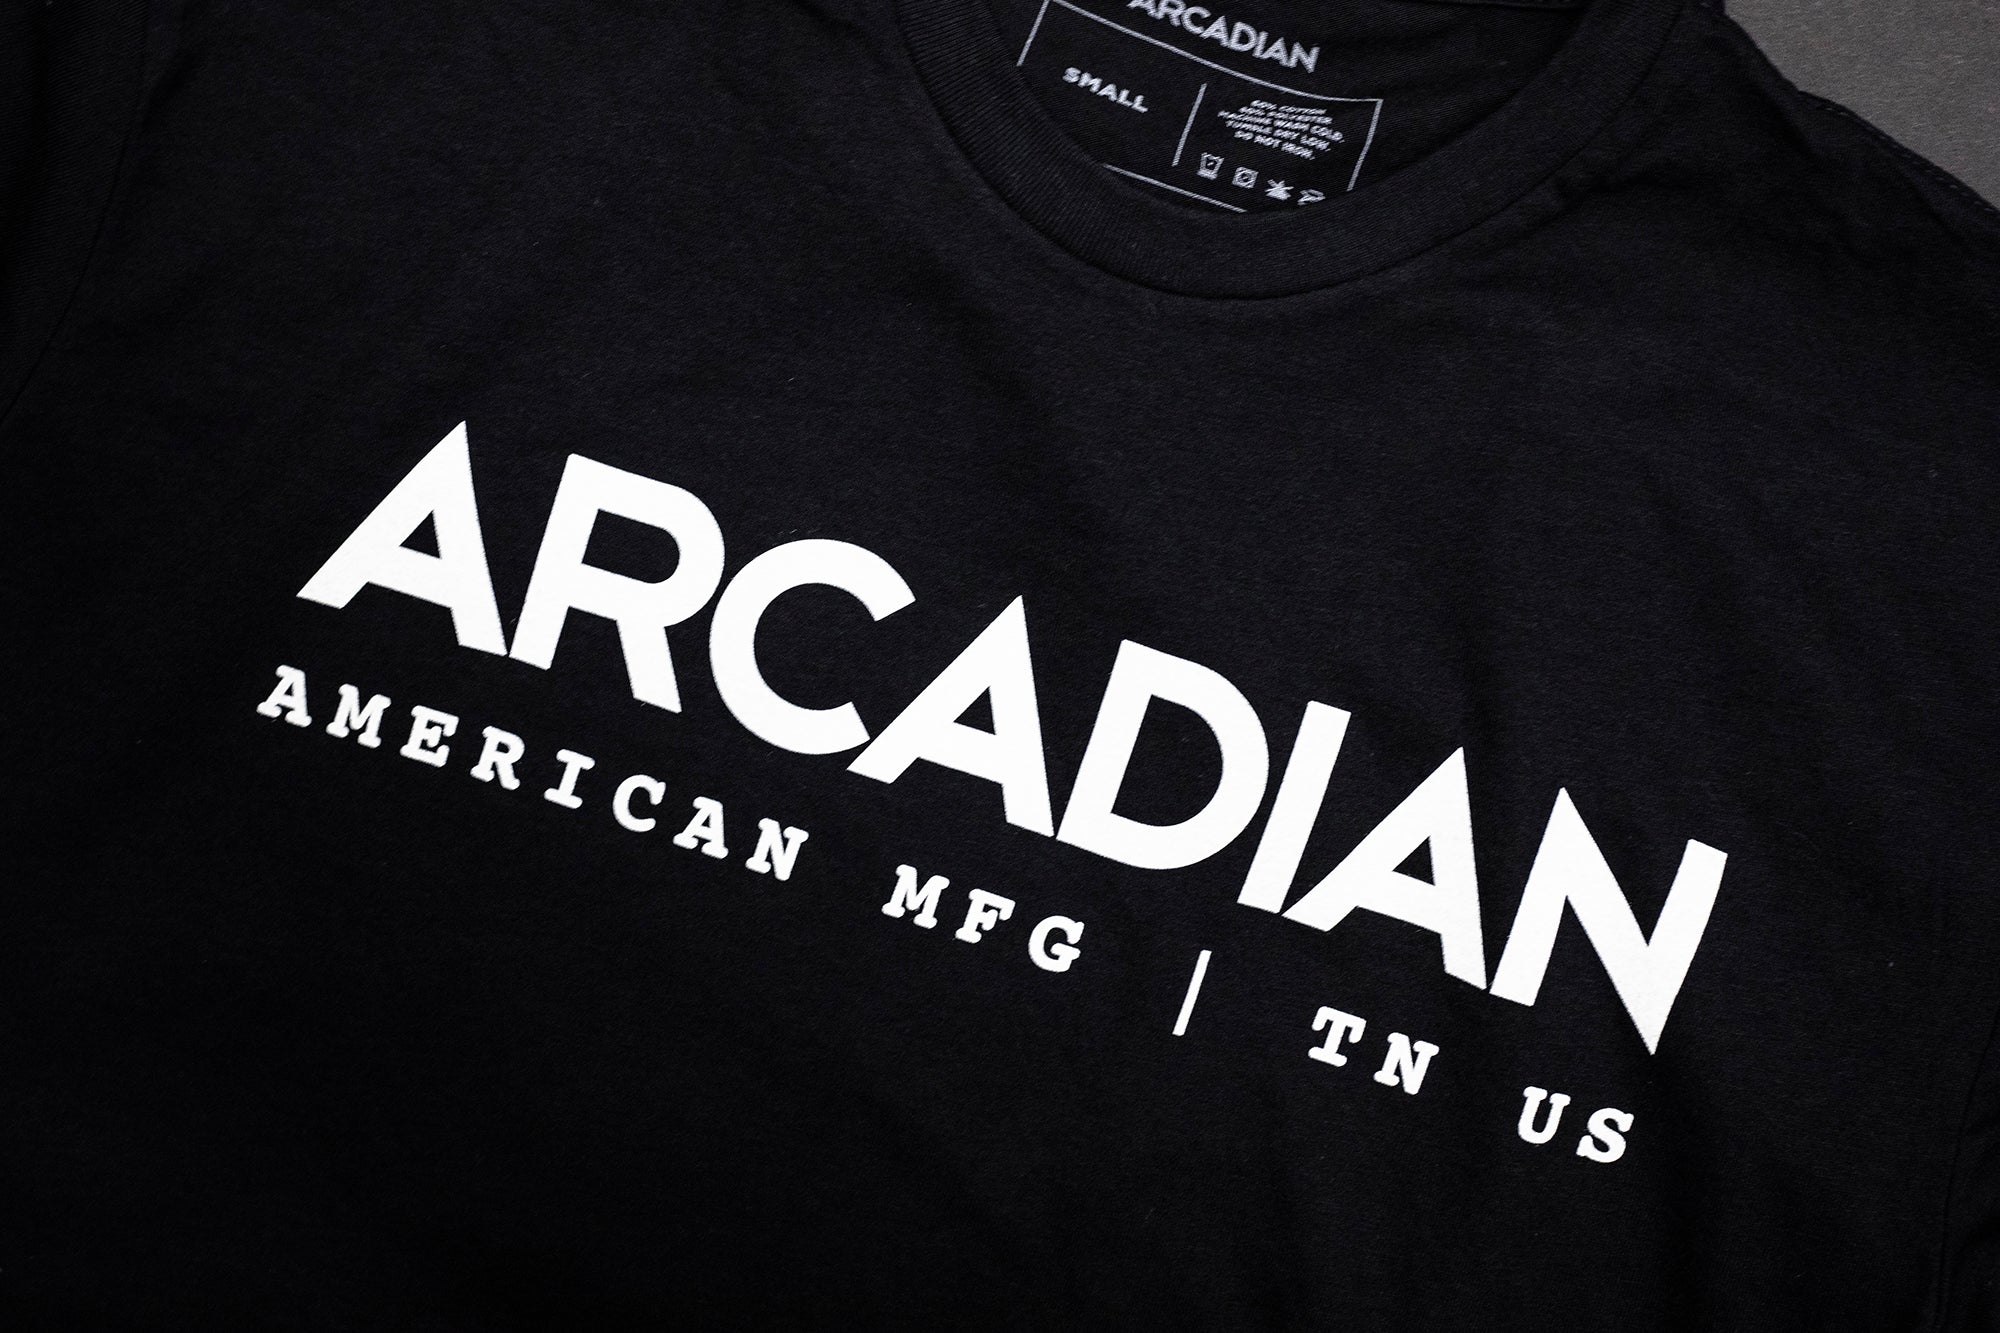 New Shirt: American MFG Tee